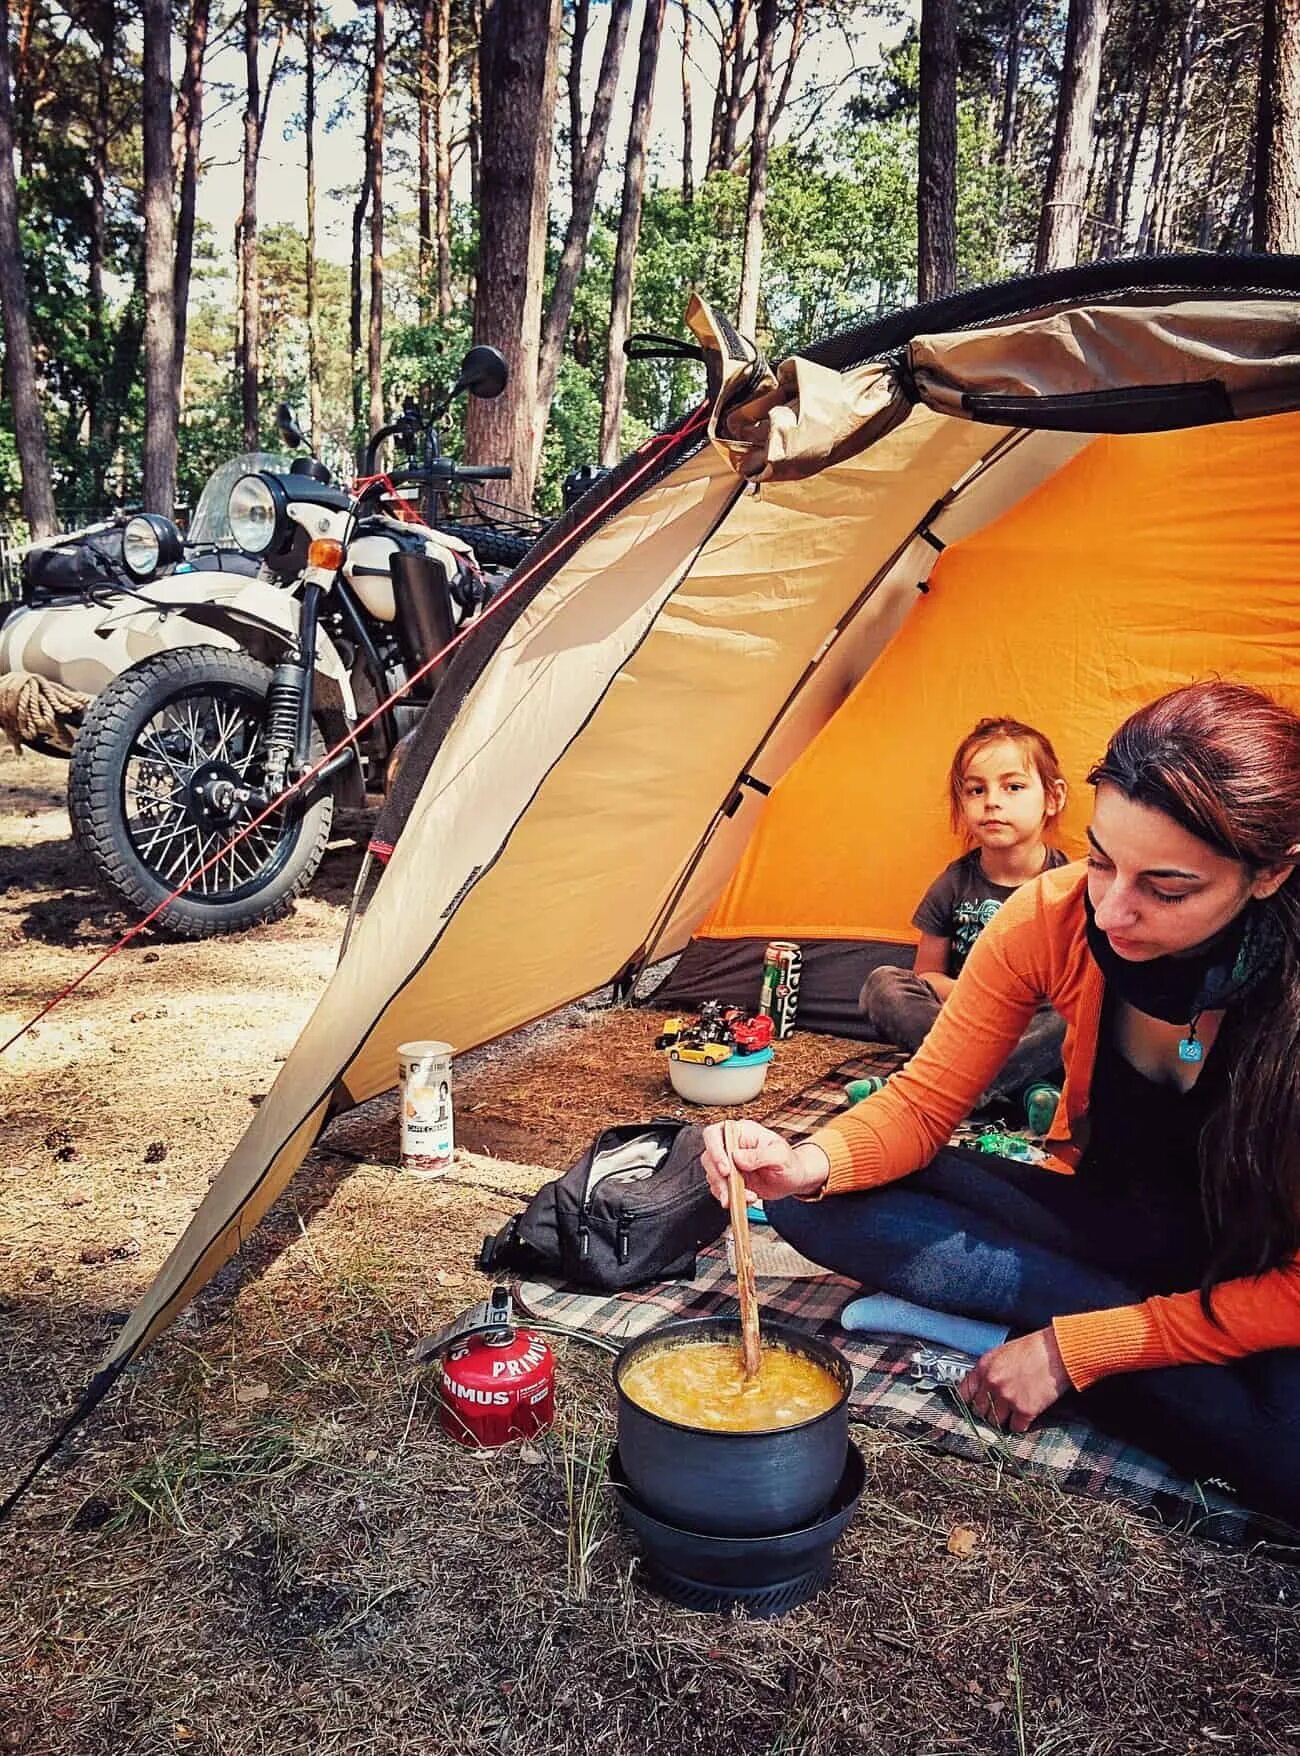 Travel camping. Палатка на природе. Поездка на природу. Путешествие с палаткой. Поход с палатками.